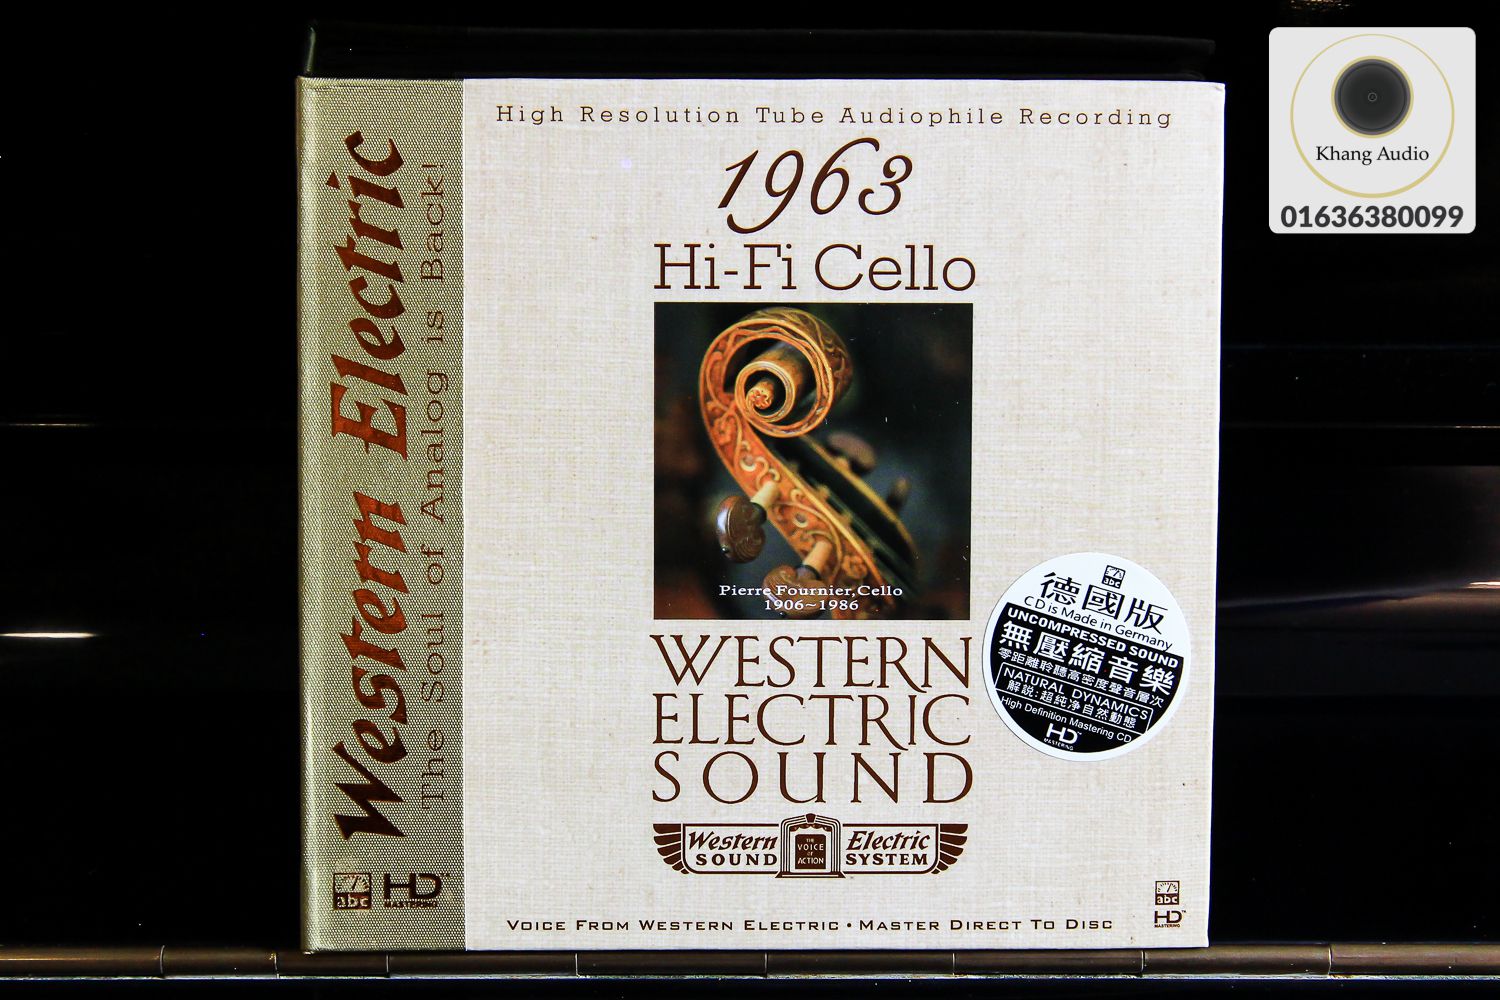 Western Electric Sound - 1963 Hi-Fi Cello Khang Audio 0336380099